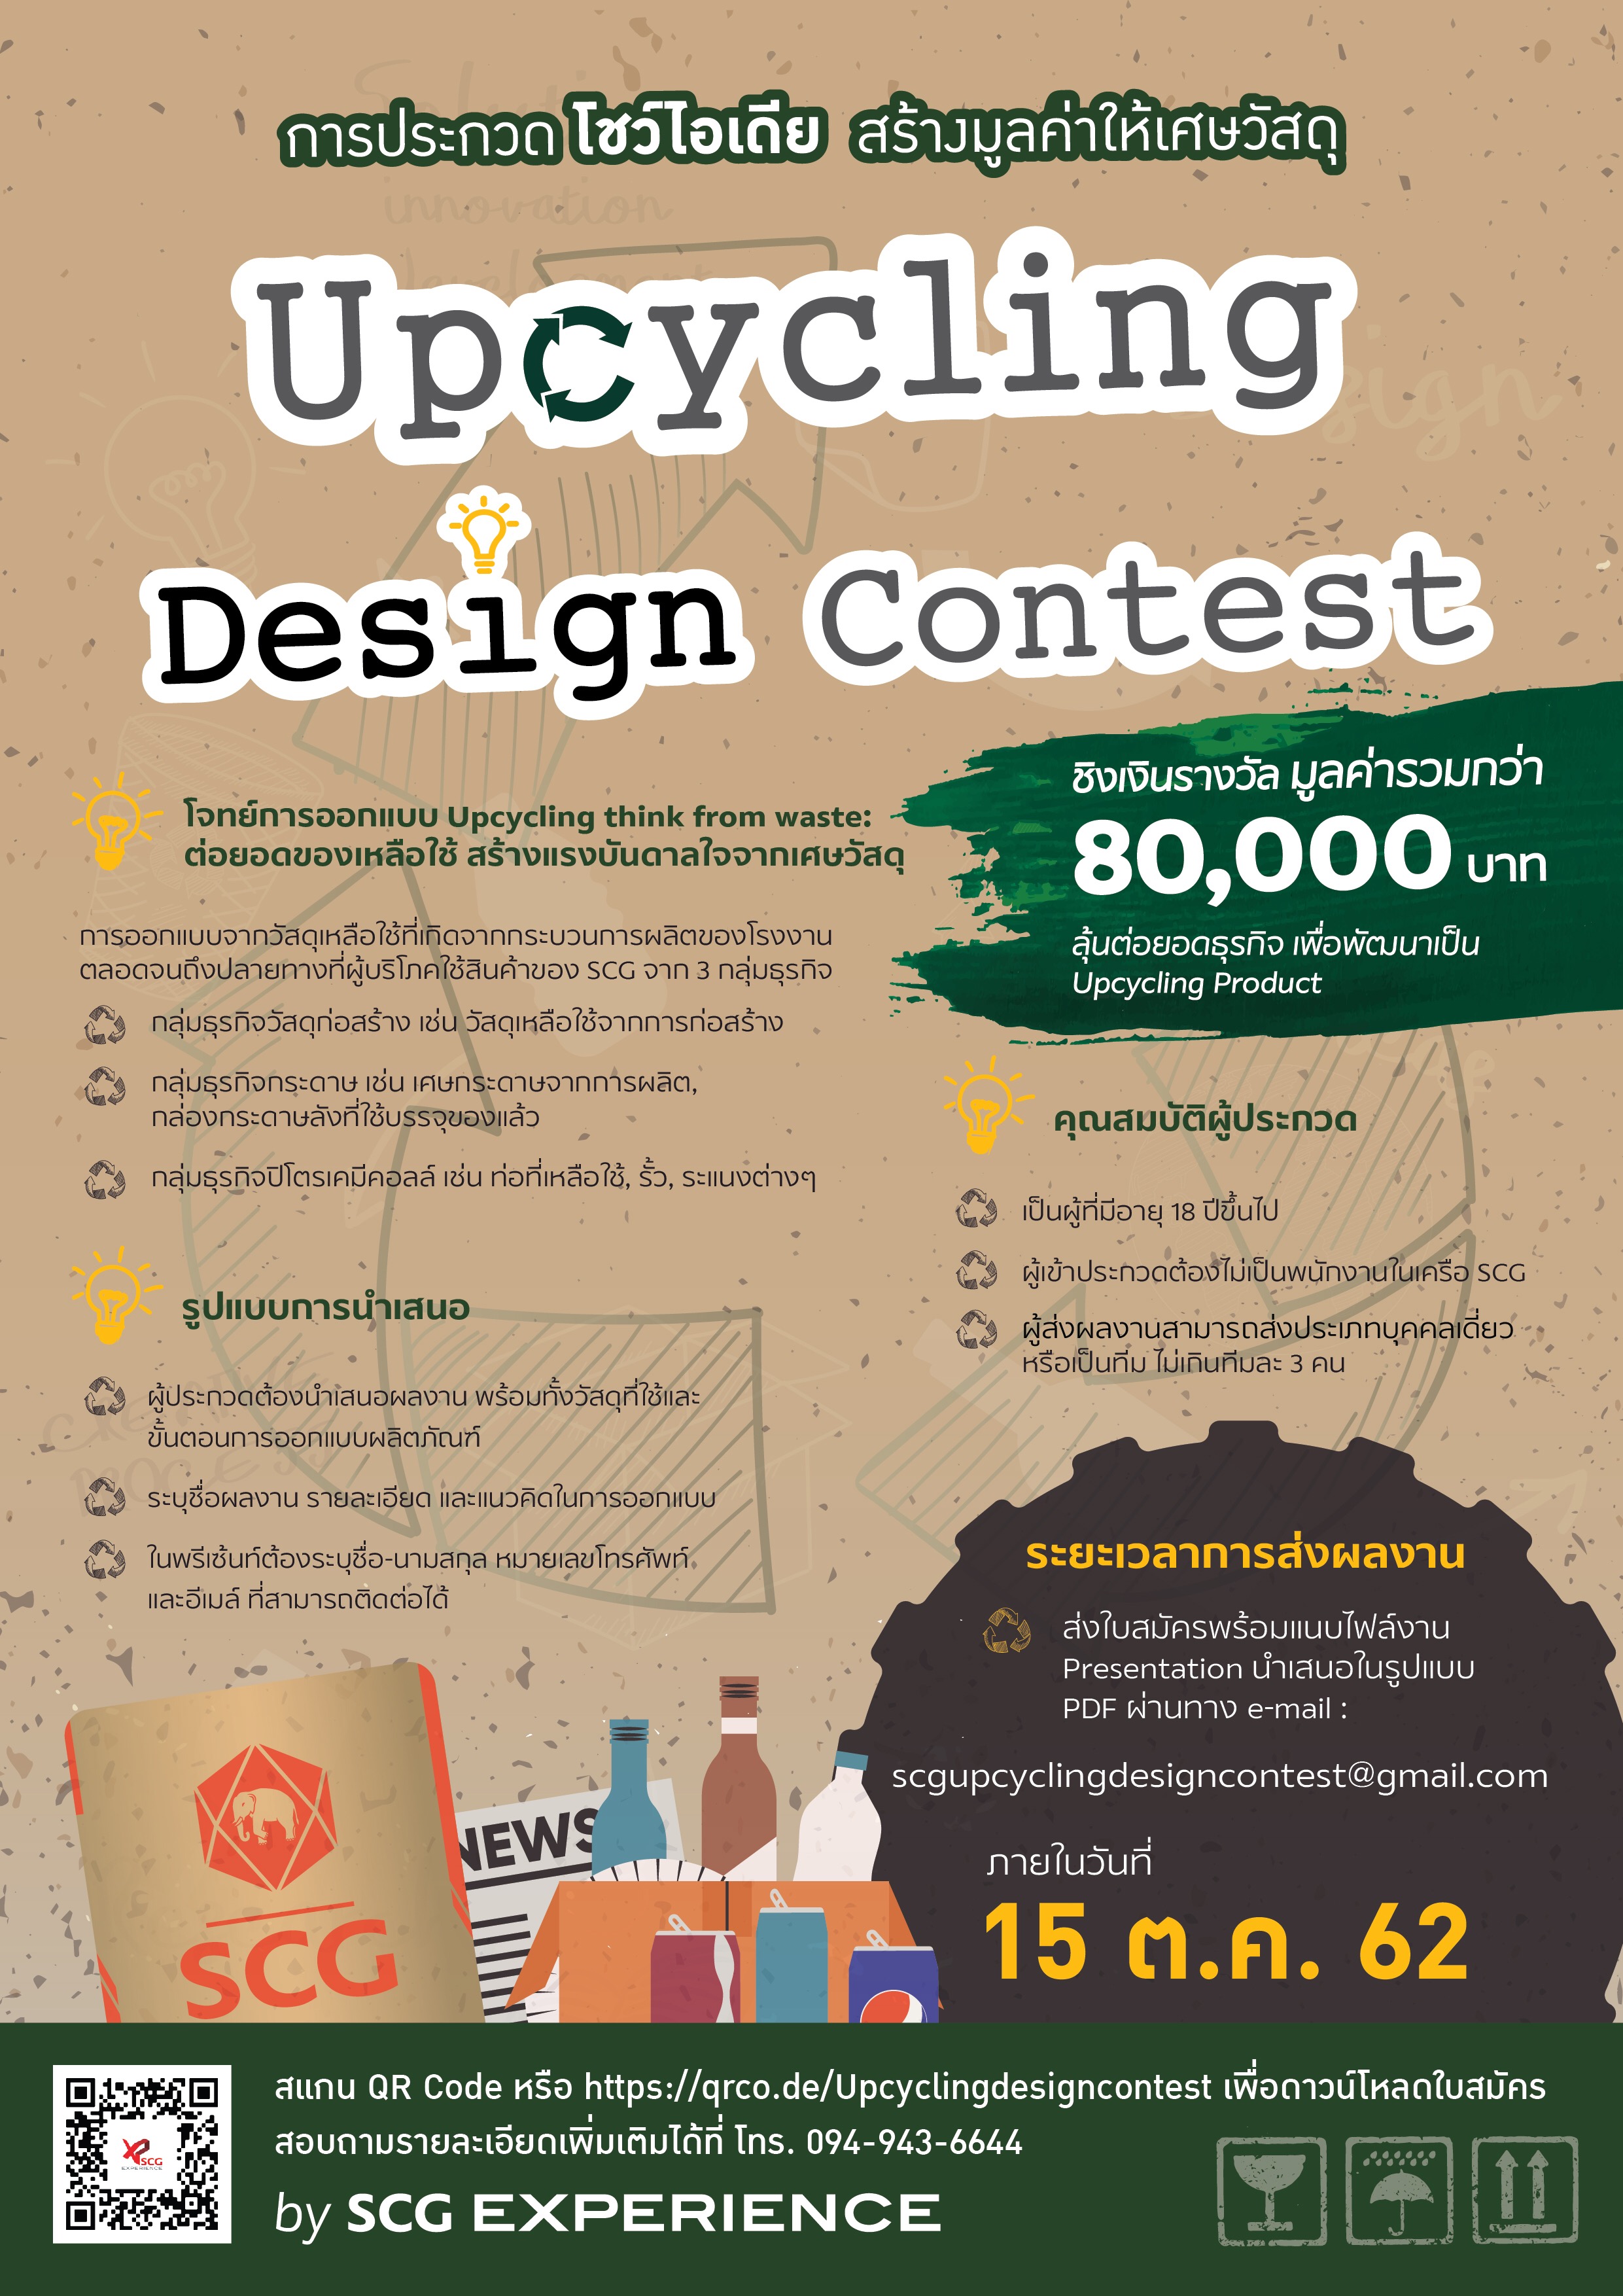 SCG Experience ชวนเข้าร่วมโครงการ Upcycling Design Contest